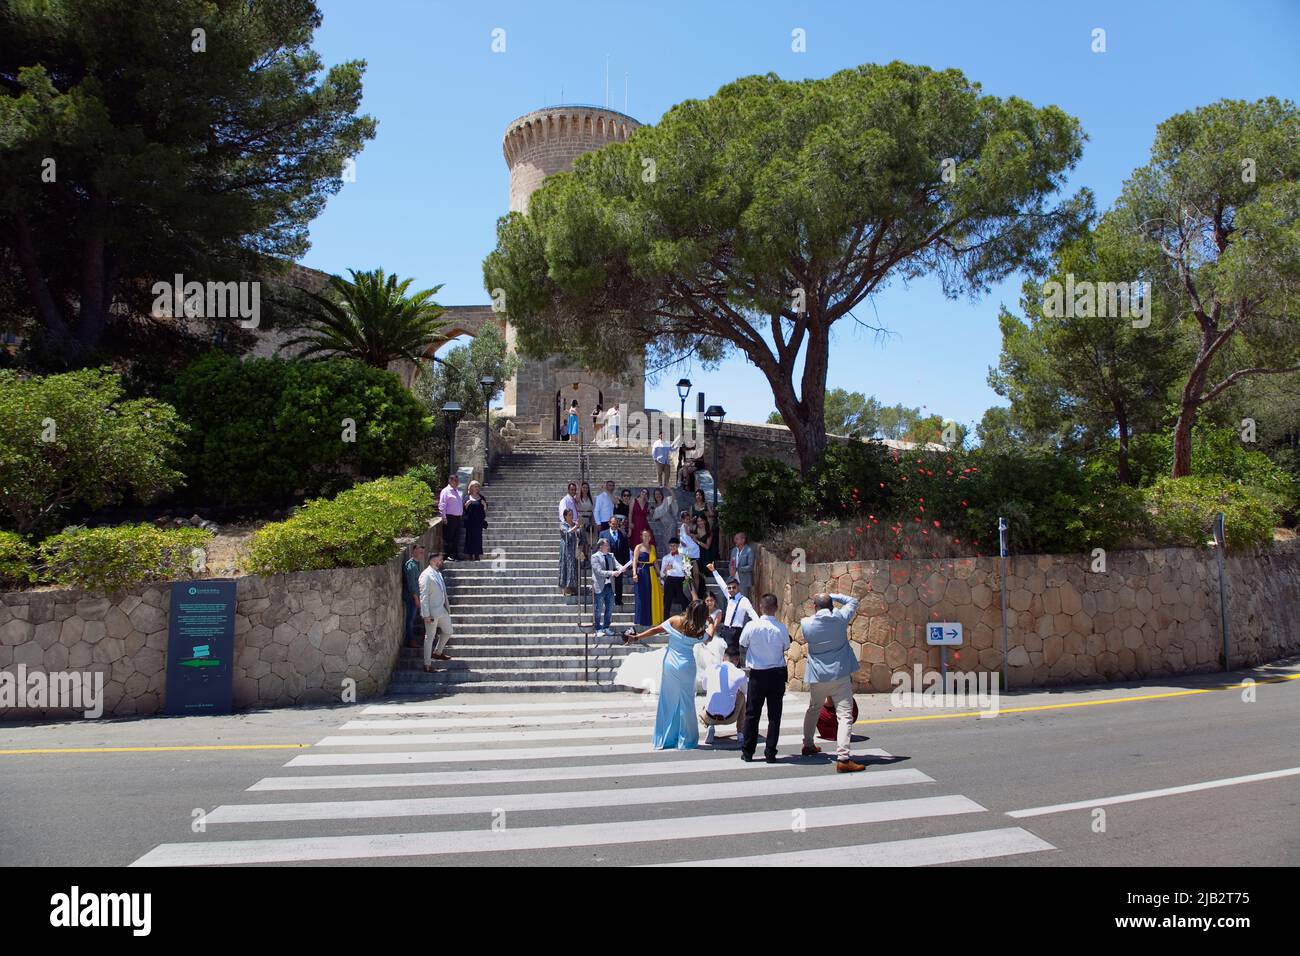 Spain, Balearic Islands, Majorca, Palma de Mallorca, Castle Bellver with wedding party taking photos on the steps. Stock Photo